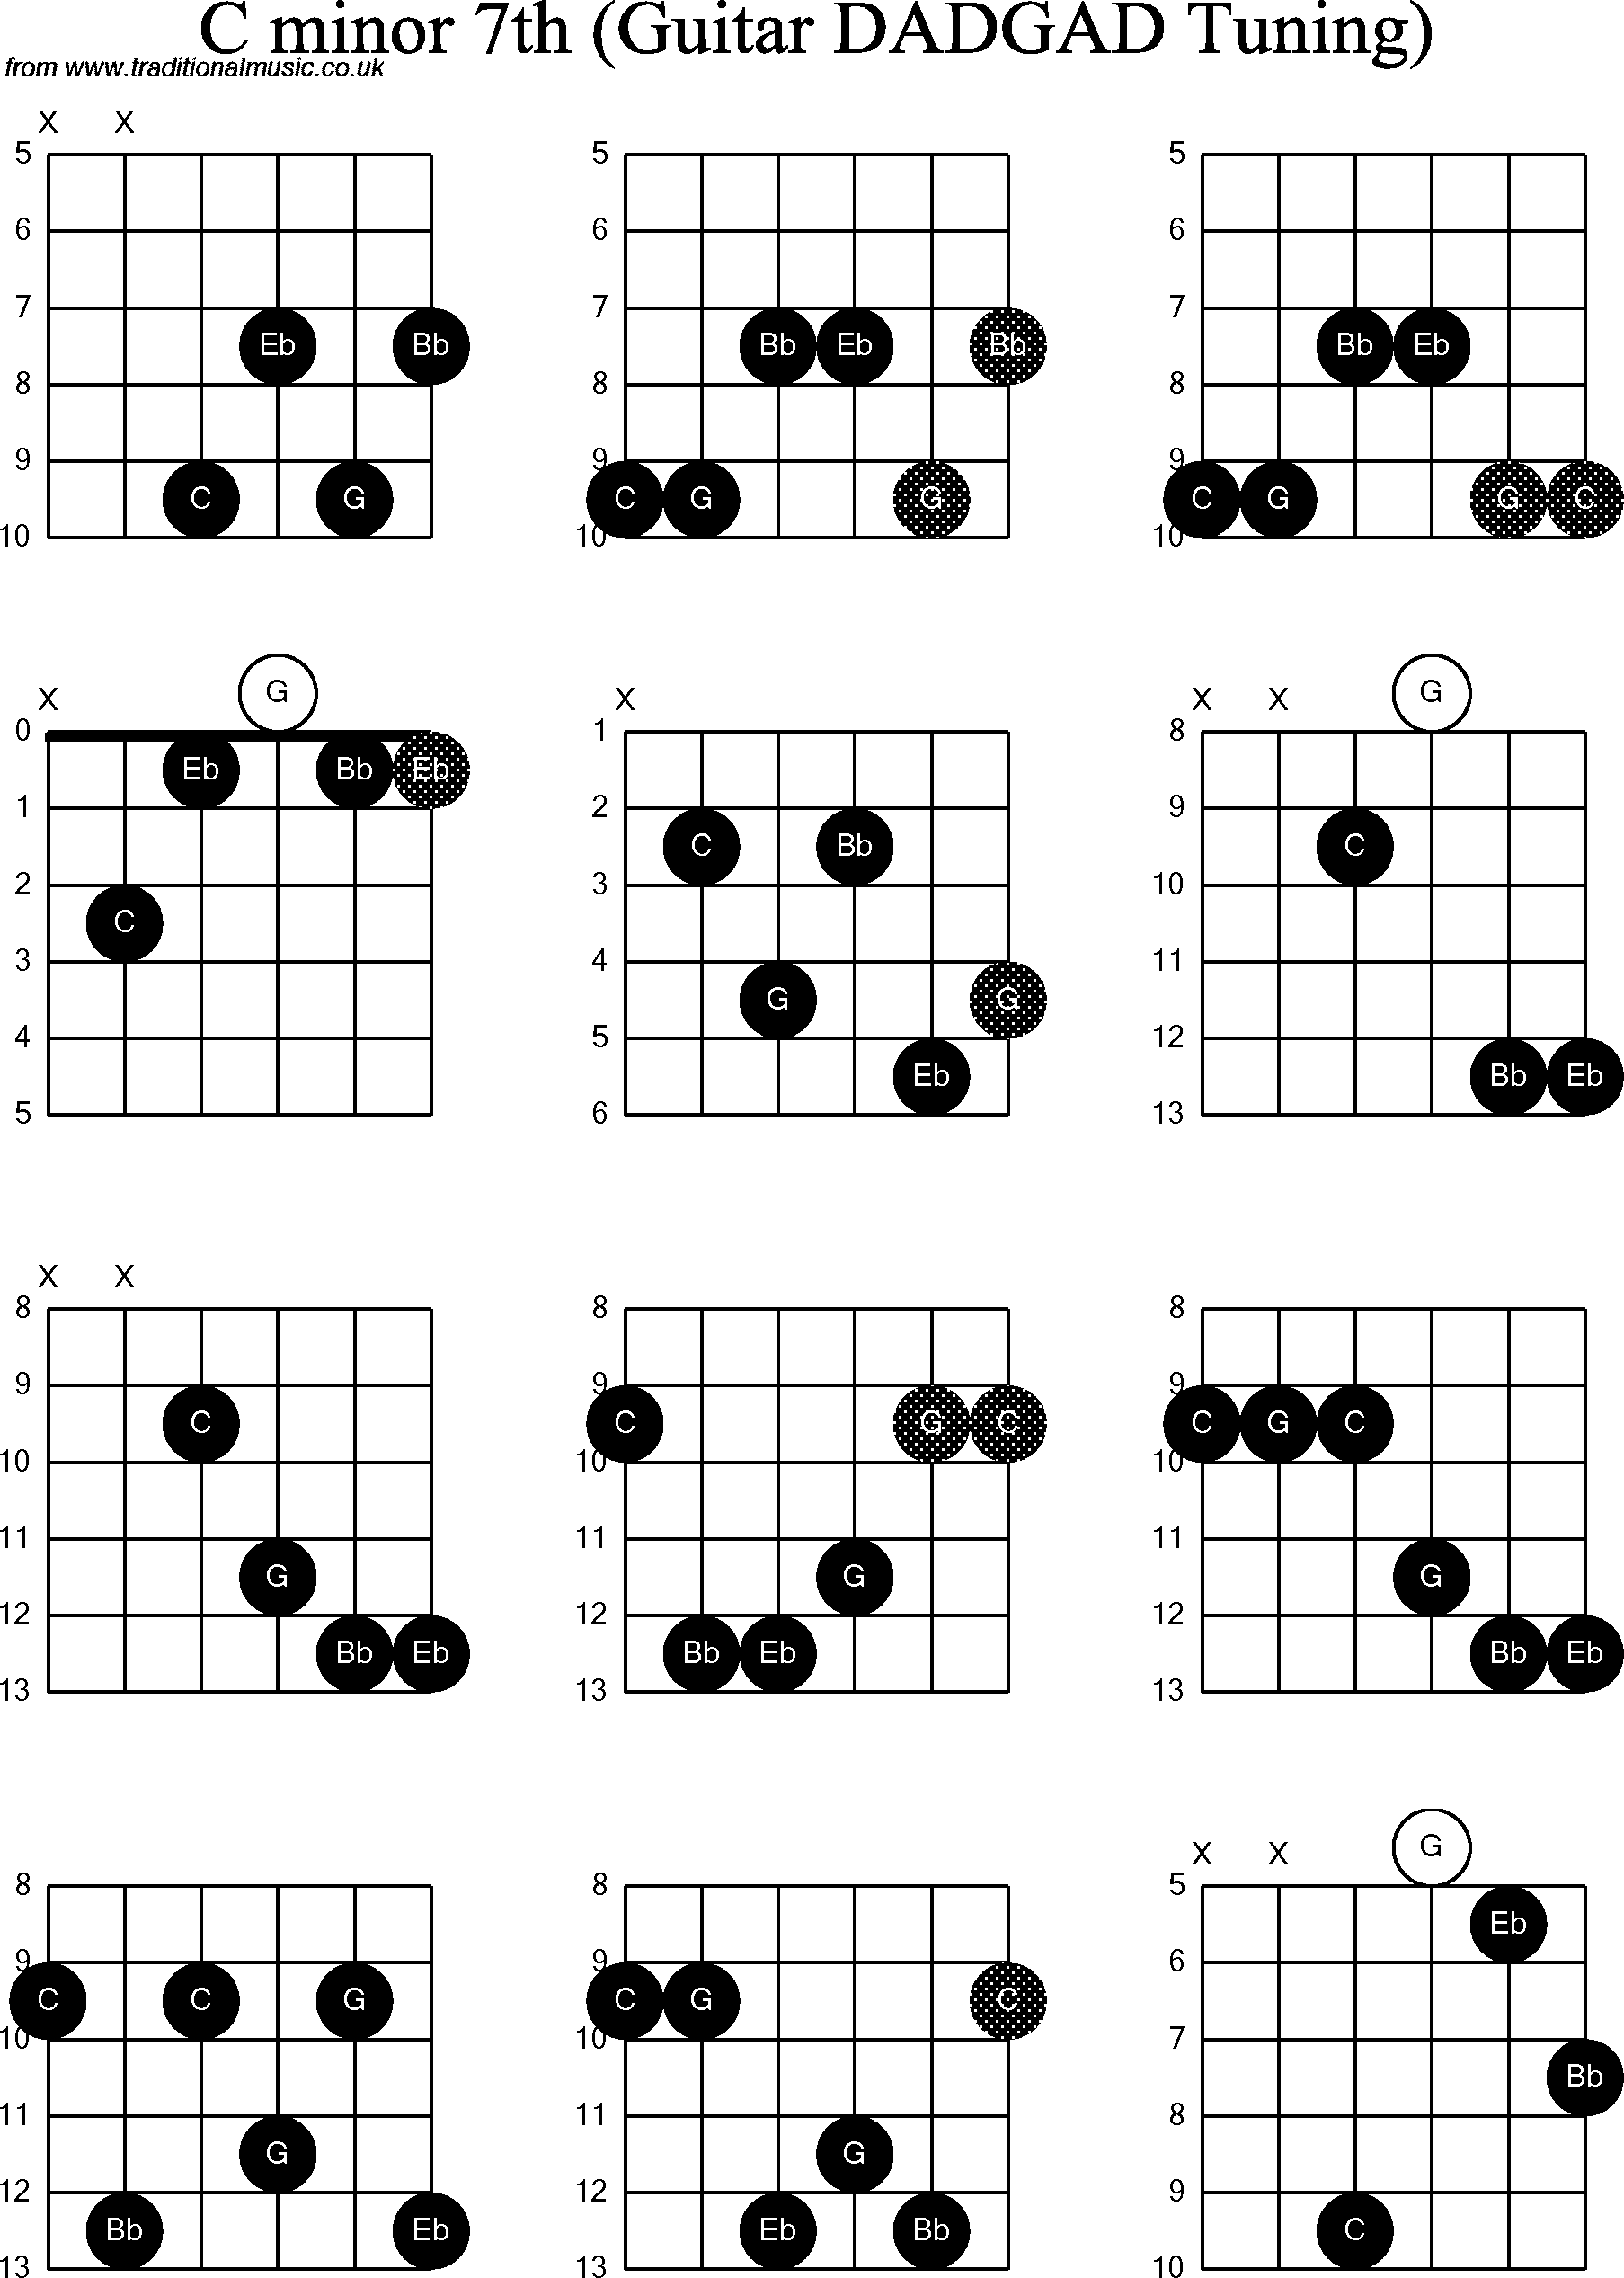 Chord Diagrams for D Modal Guitar(DADGAD), C Minor7th